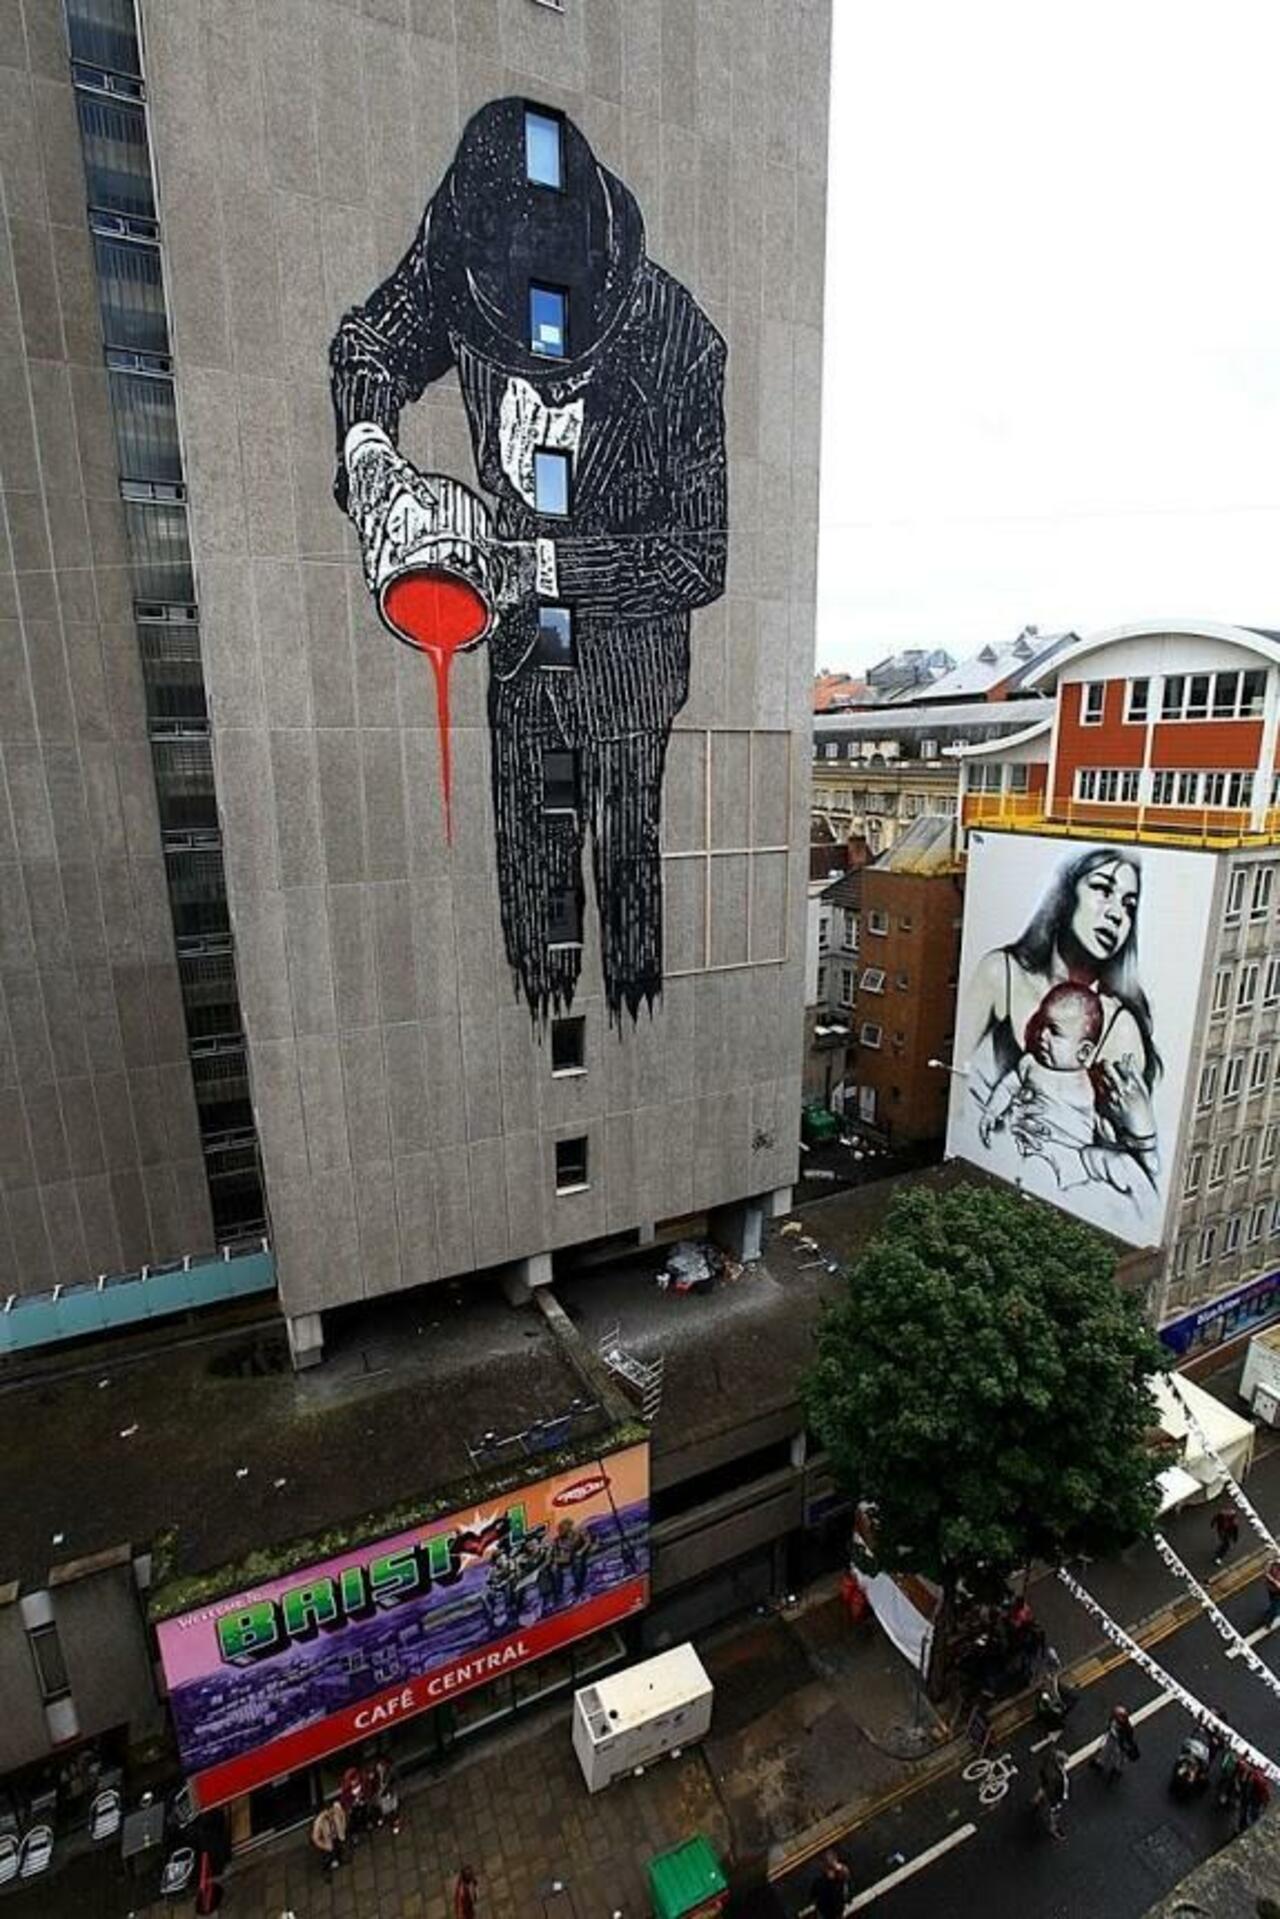 "@Pitchuskita: Nick Walker 
in the background El Mac 
Bristol, UK

#streetart #art #urbanart #graffiti #mural http://t.co/vHDN9hl2ZA"